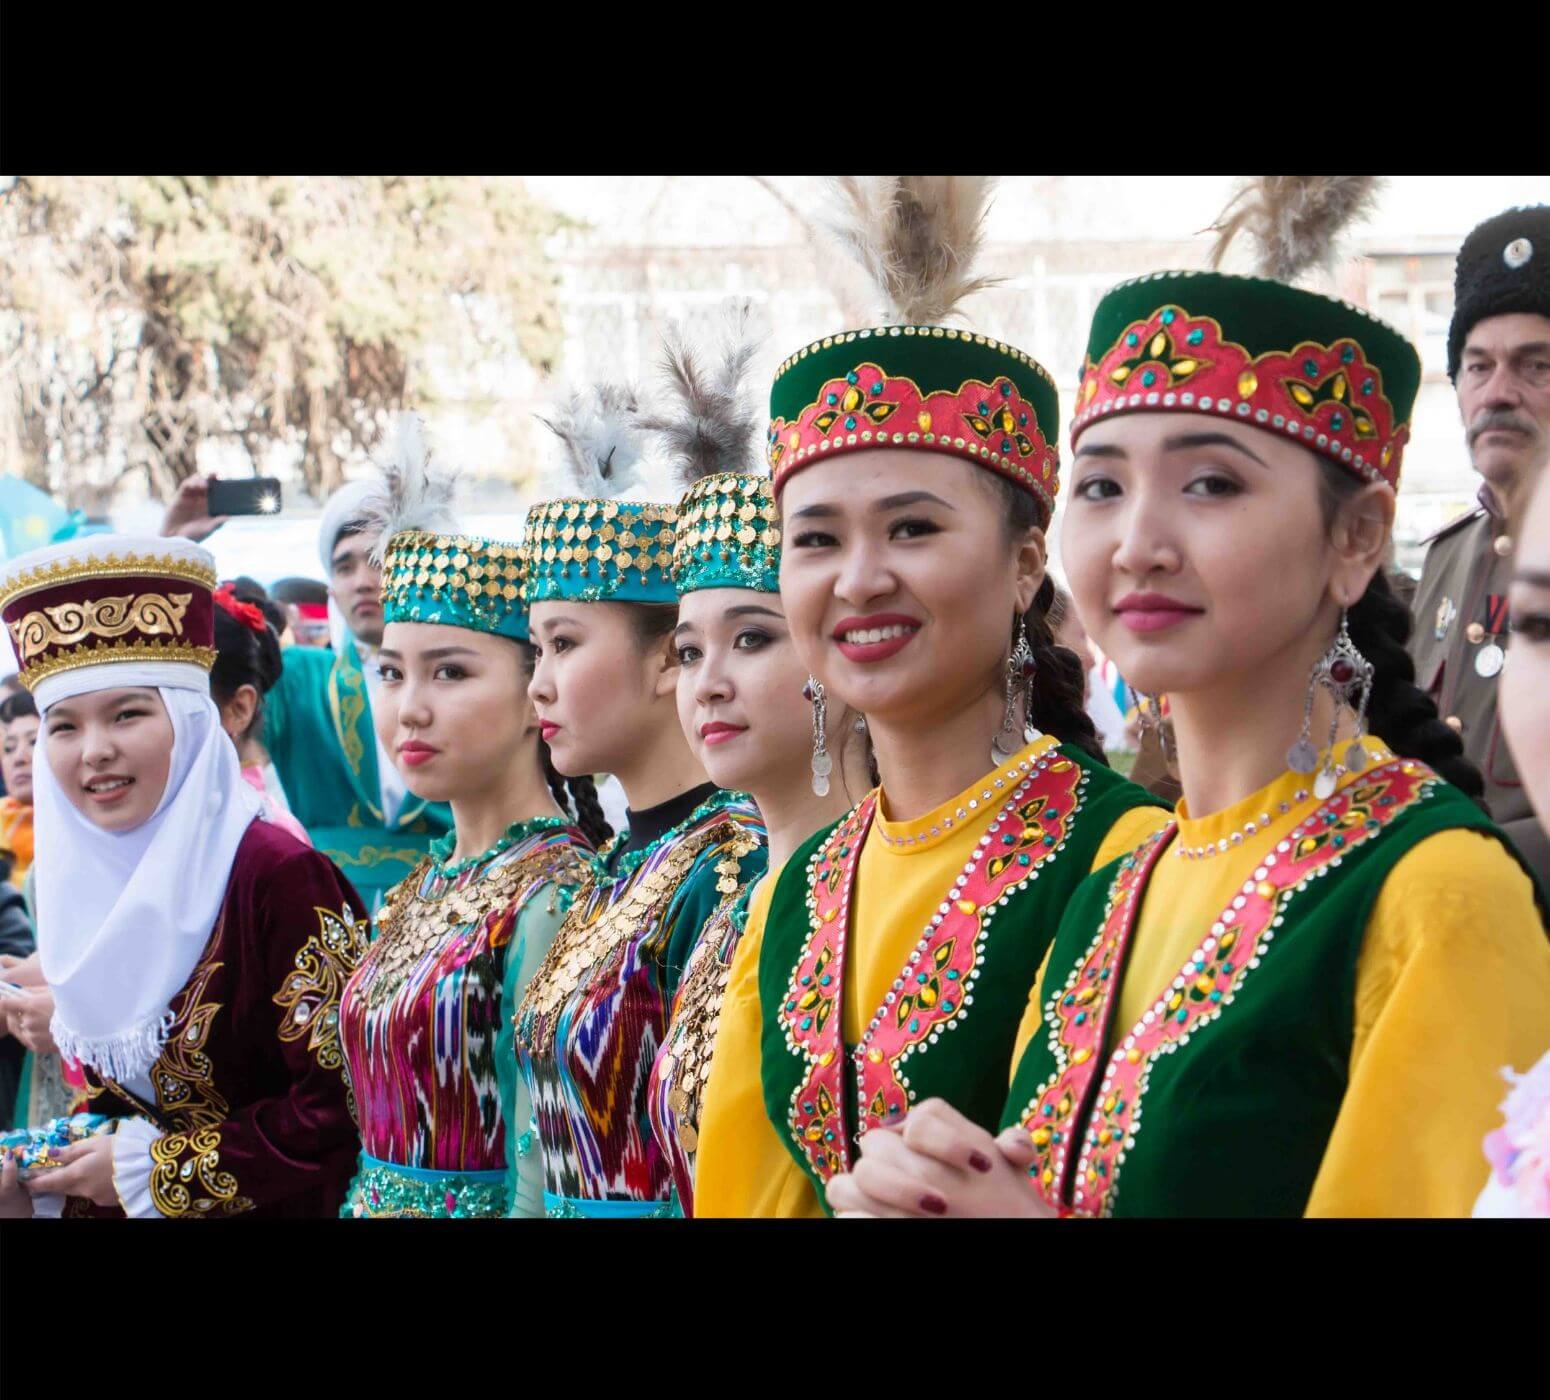 Kazakh people. Уйгуры и казахи. Казахстан люди. Население Казахстана. Казахстан Национальность.